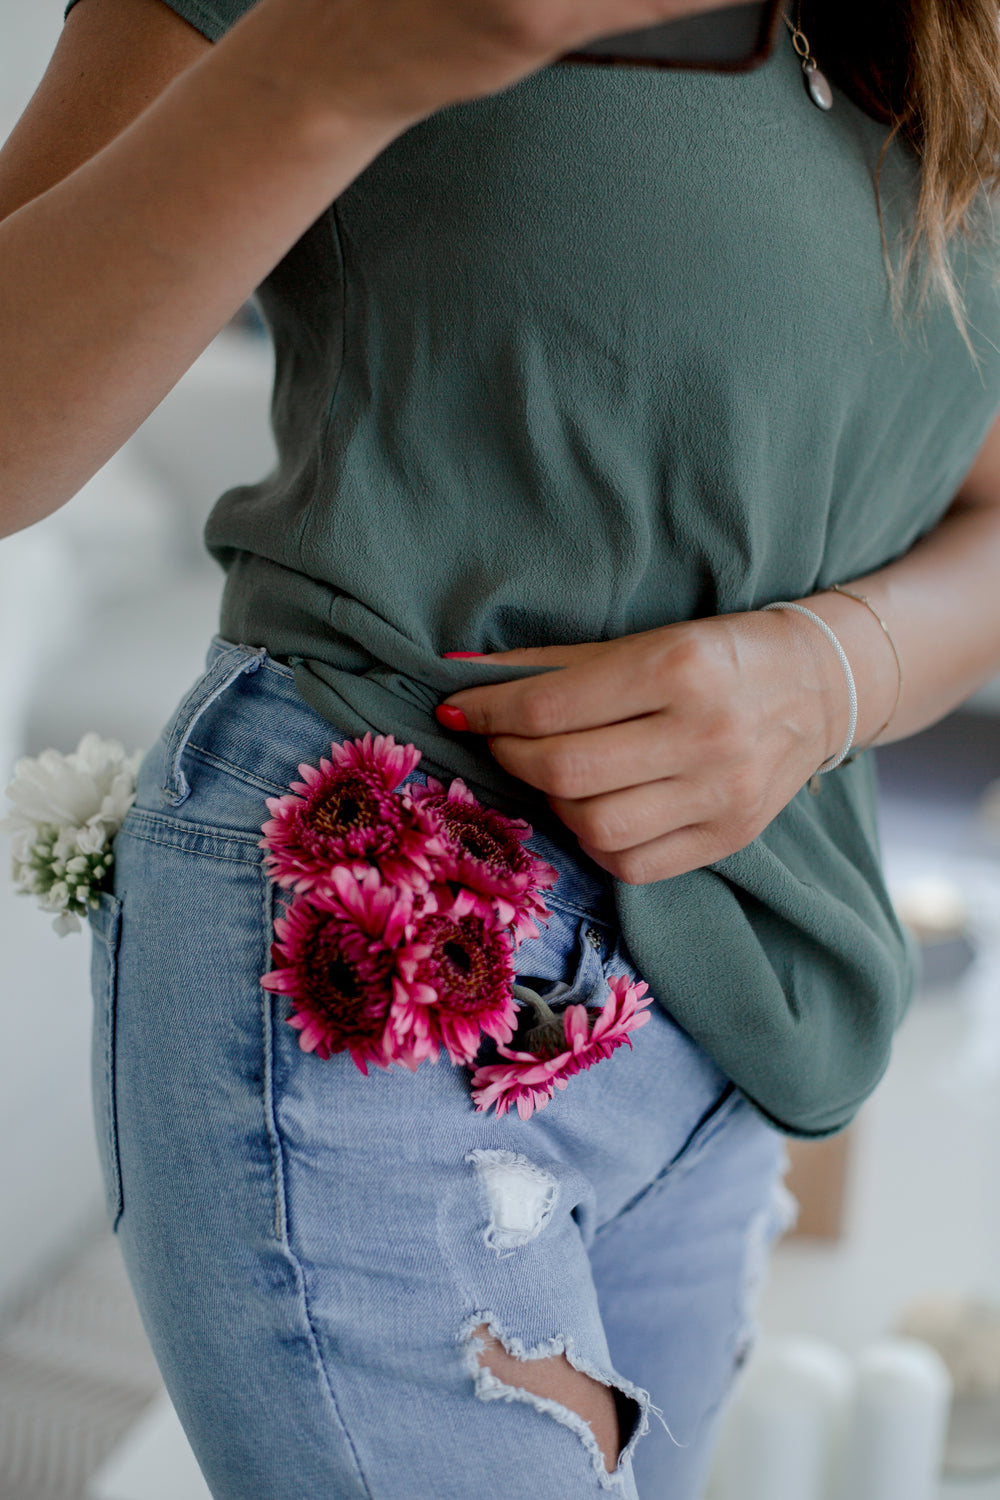 jean pockets full of flowers